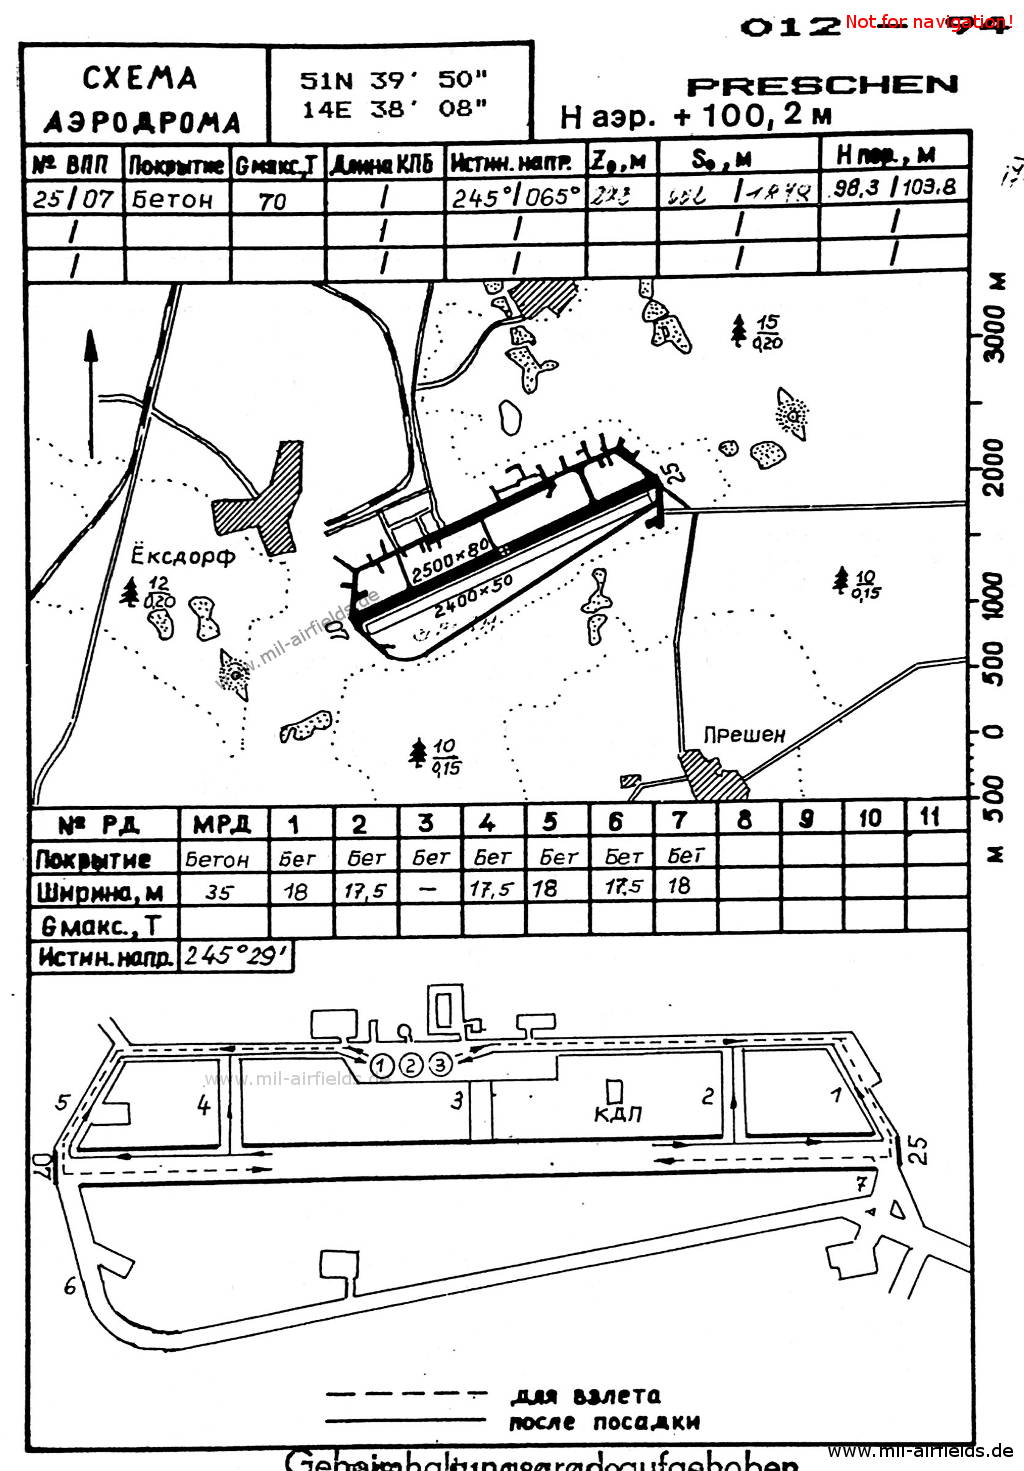 Karte NVA-Flugplatz Preschen